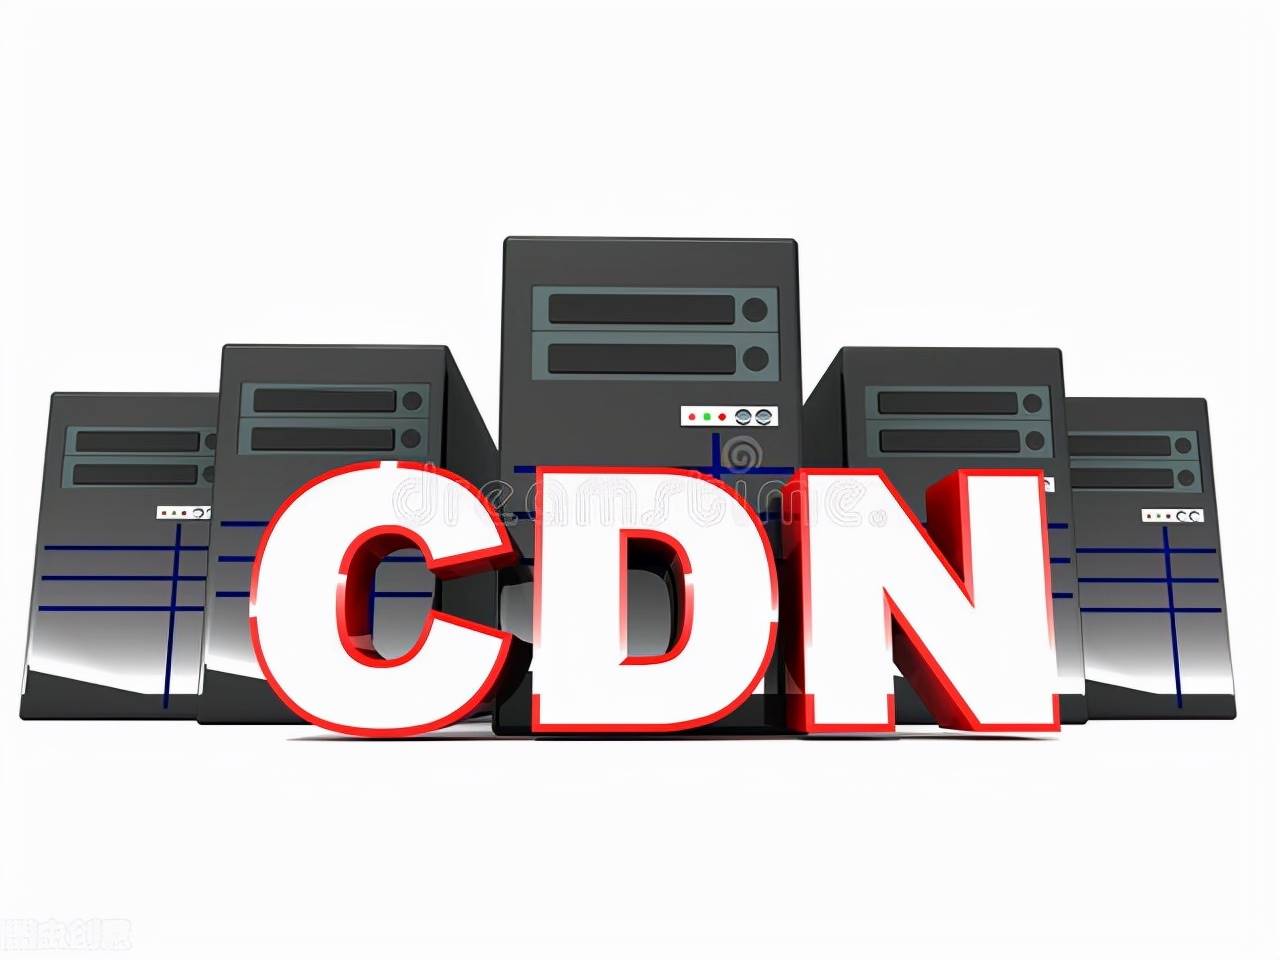 cdn服务器是什么-cdn经营许可资质-第2张图片